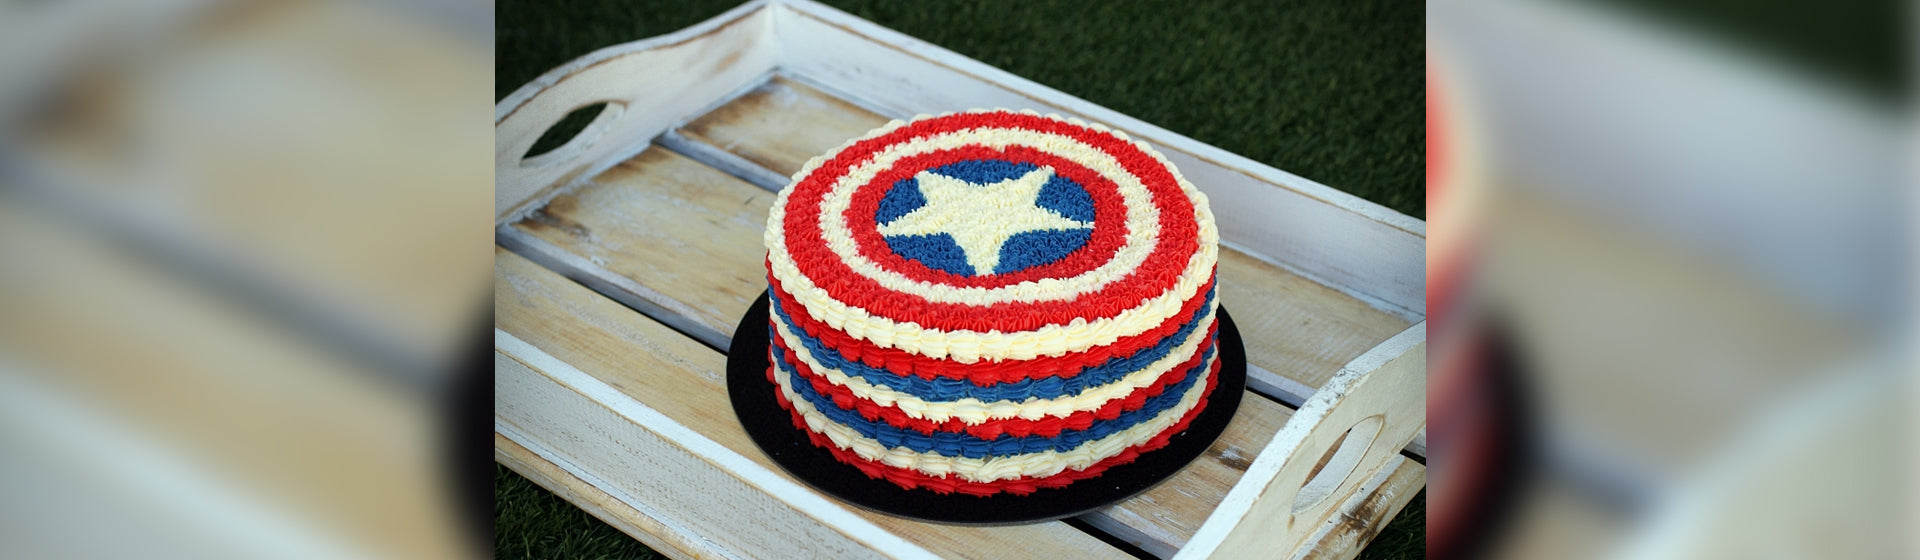 Captain America Birthday Cake - Flecks Cakes